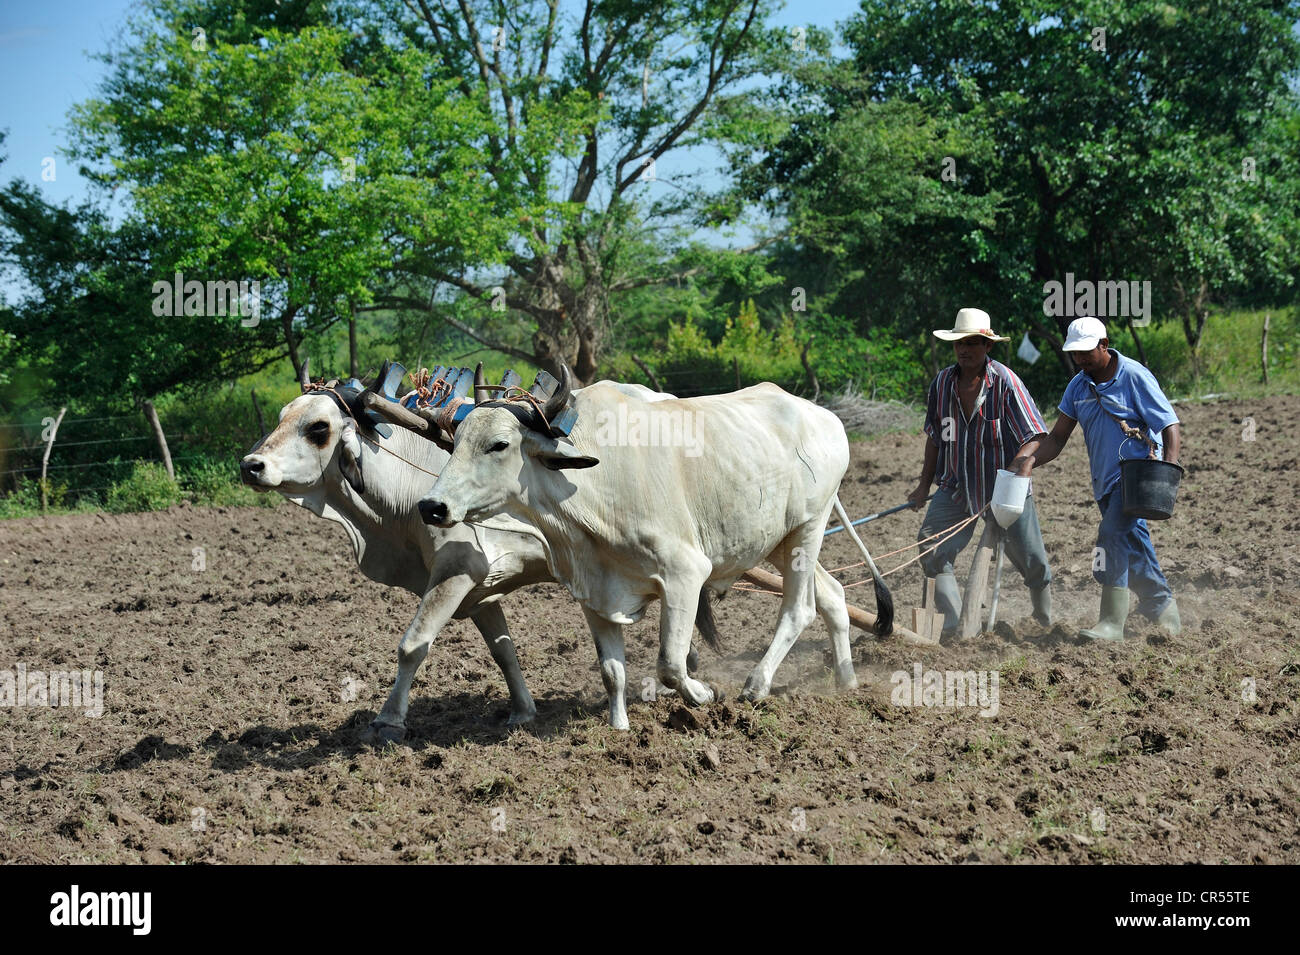 Zwei Bauern Pflügen das Feld mit zwei Ochsen, Joch Ochsen, El Angel, Bajo Lempa, El Salvador, Mittelamerika, Lateinamerika Stockfoto